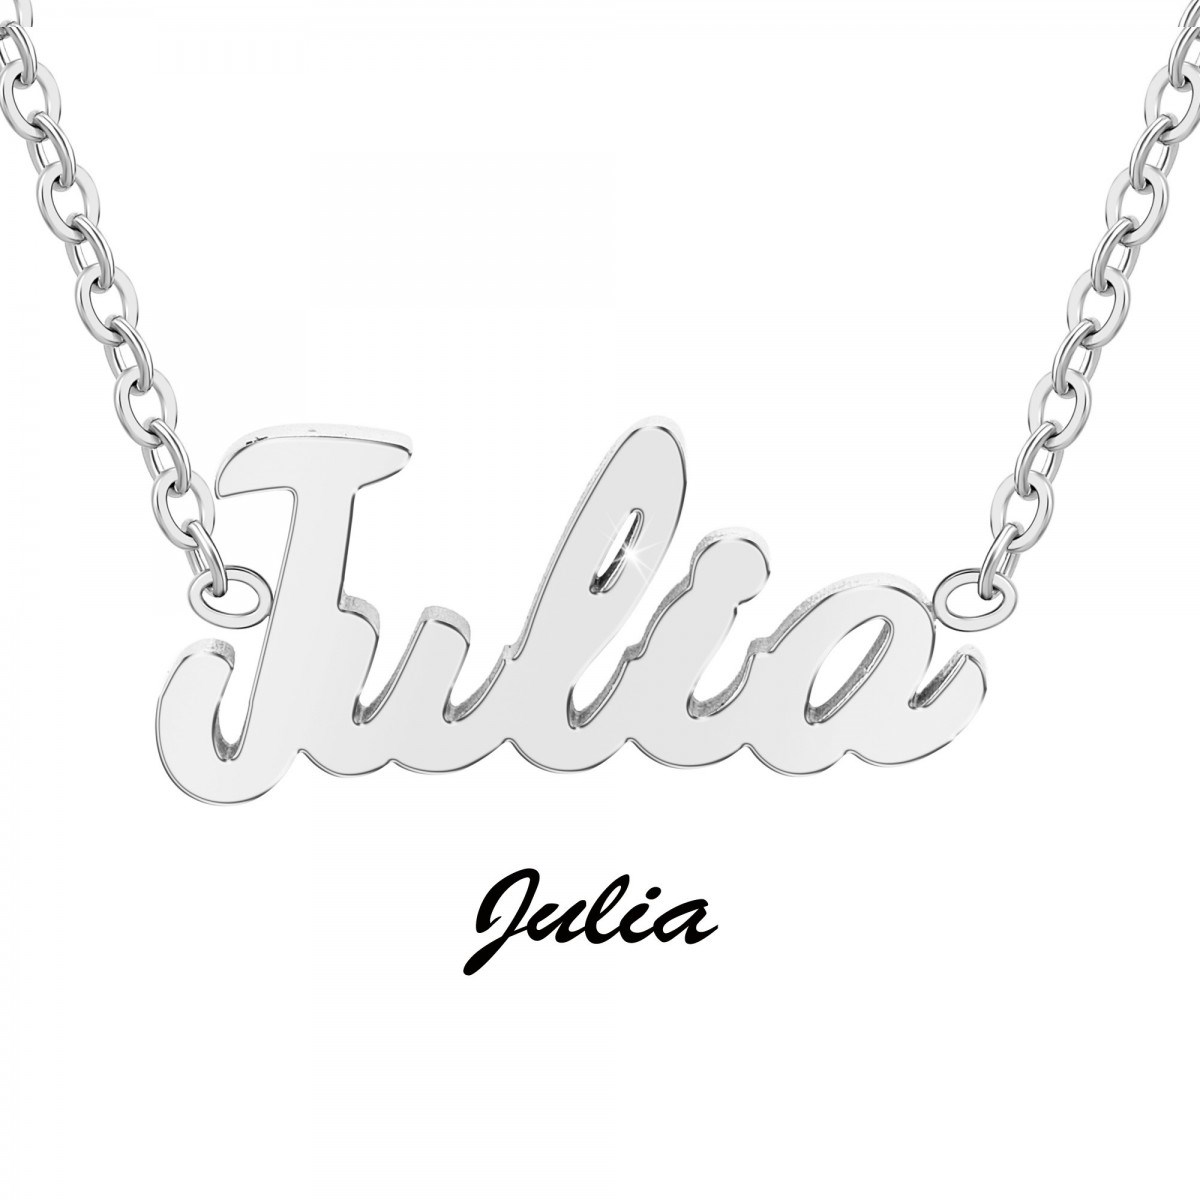 Julia - Collier prénom - vue 3